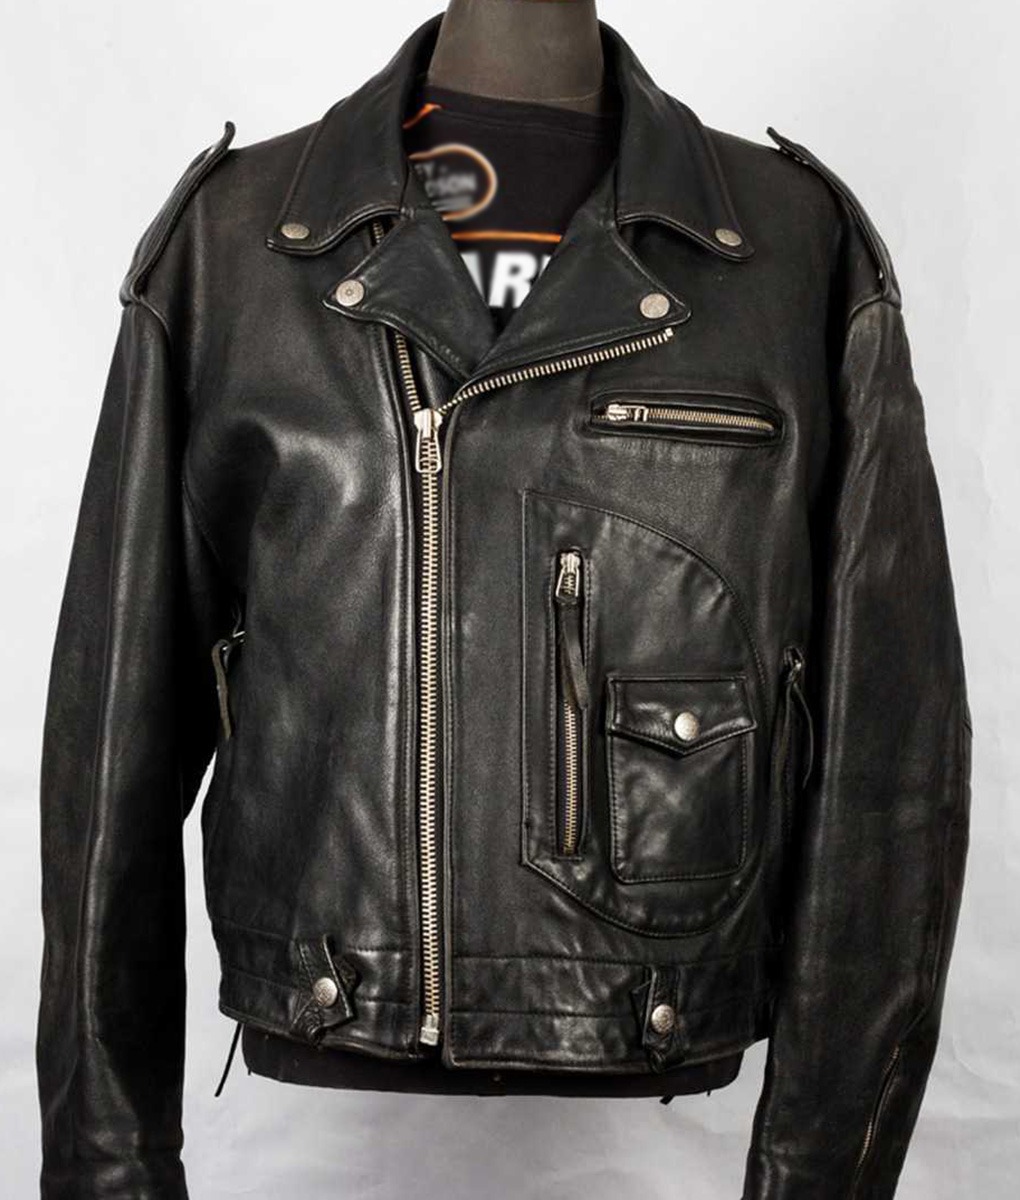 Jacob Elordi Death Cult Black Leather Jacket - Death Cult Black Leather ...